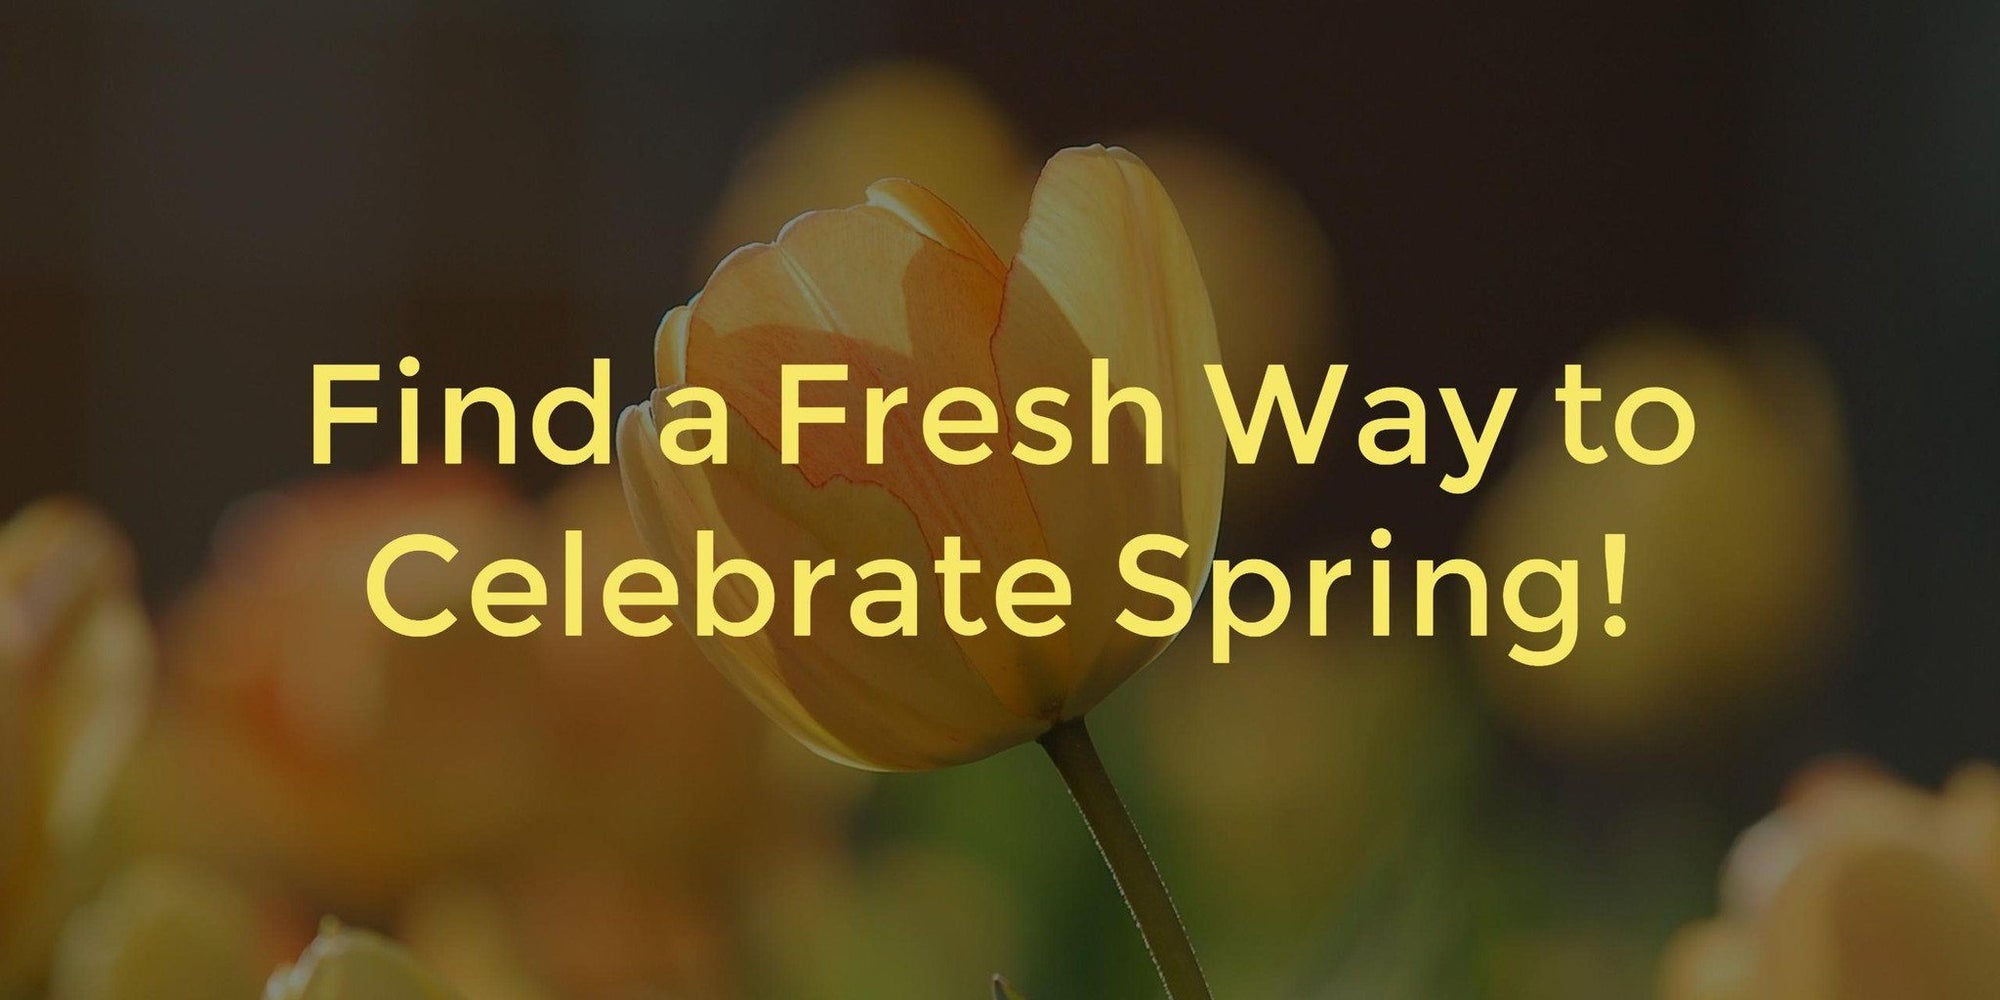 5 Fun Ways to Celebrate Spring!